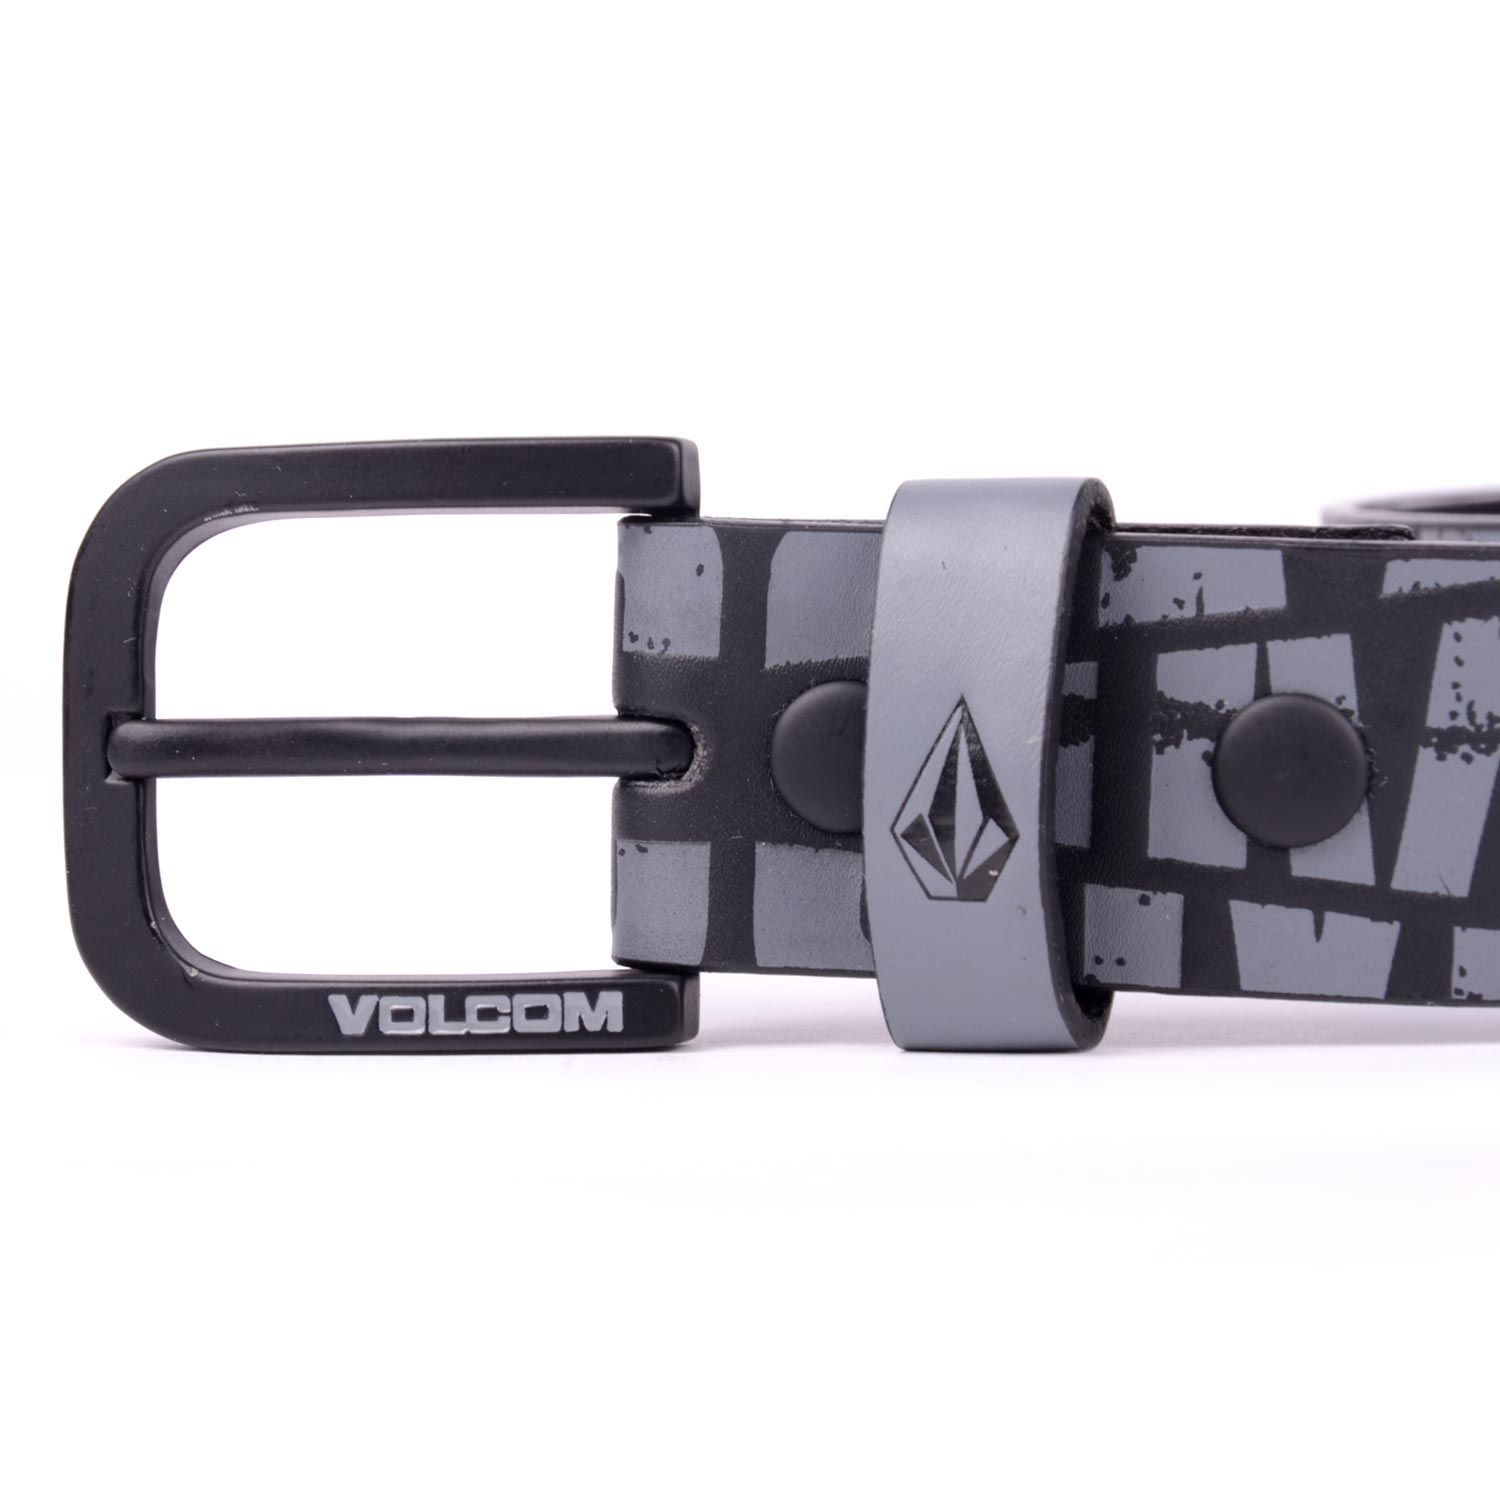 Volcom Extreme PU Belt